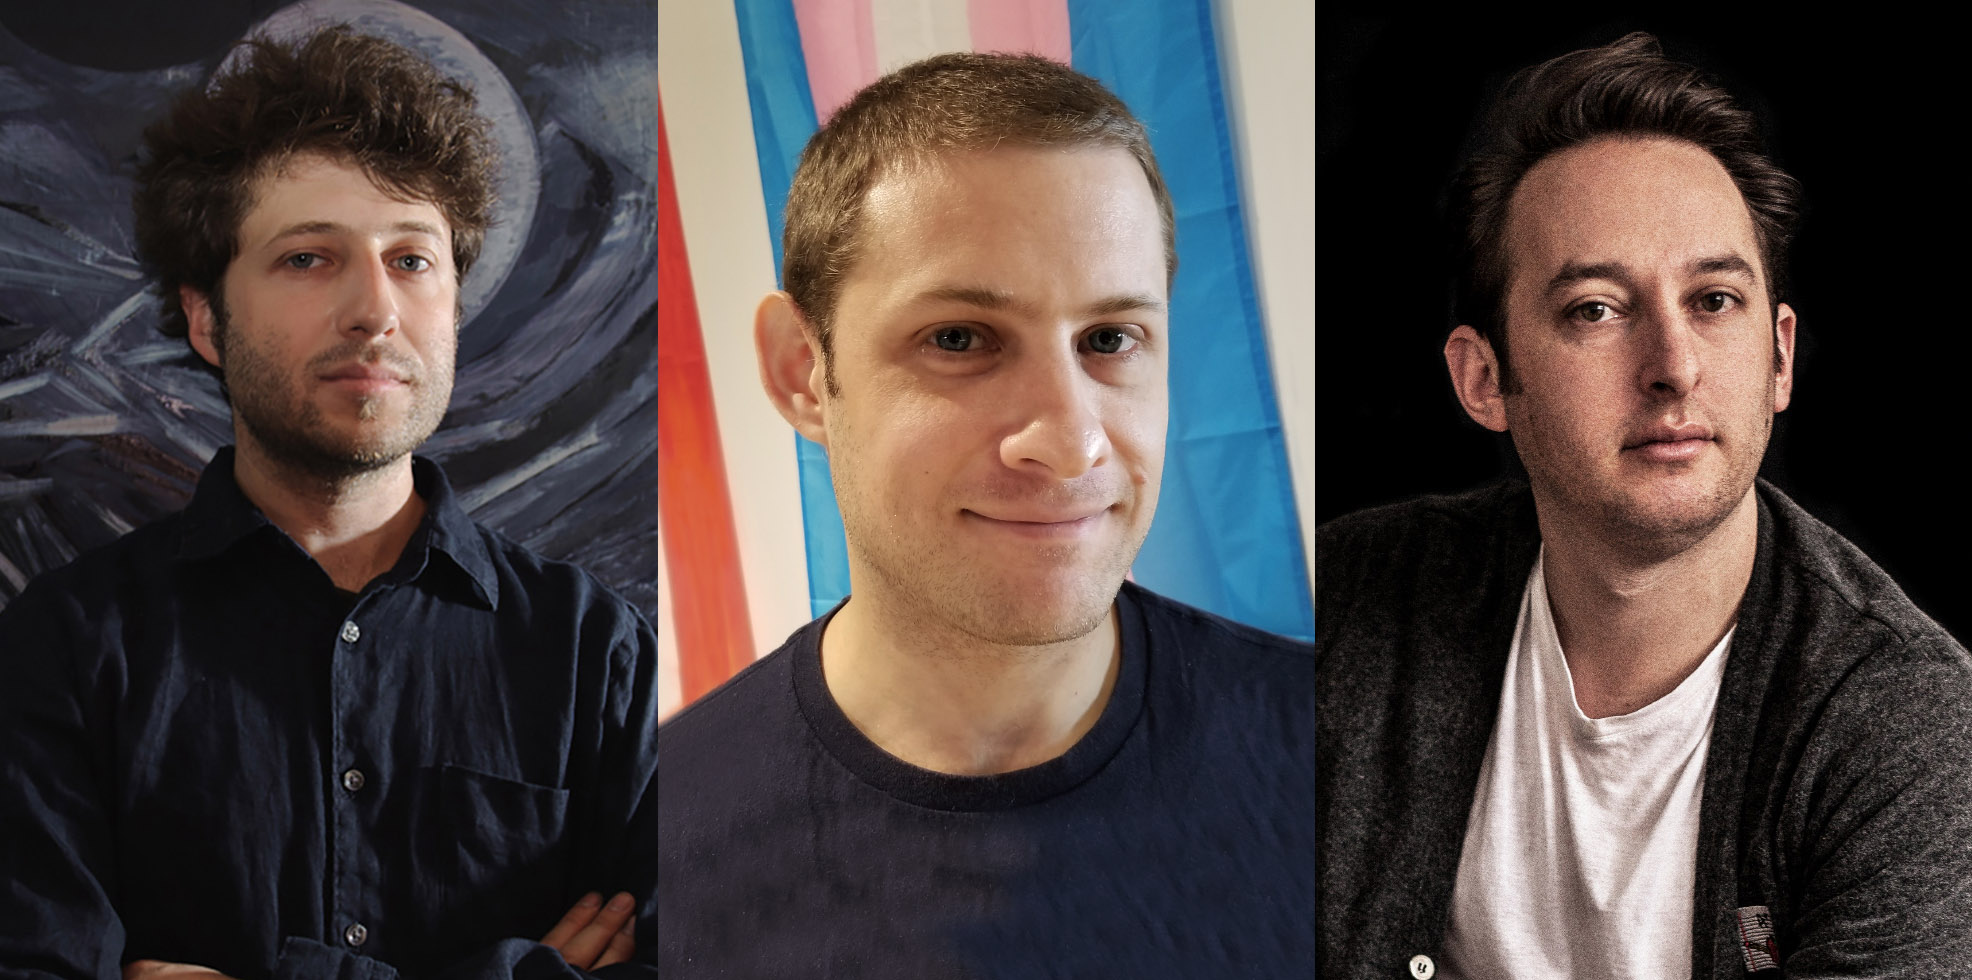 Portraits of Max Razdow, Ollie Razdow, and Jamie Zigelbaum